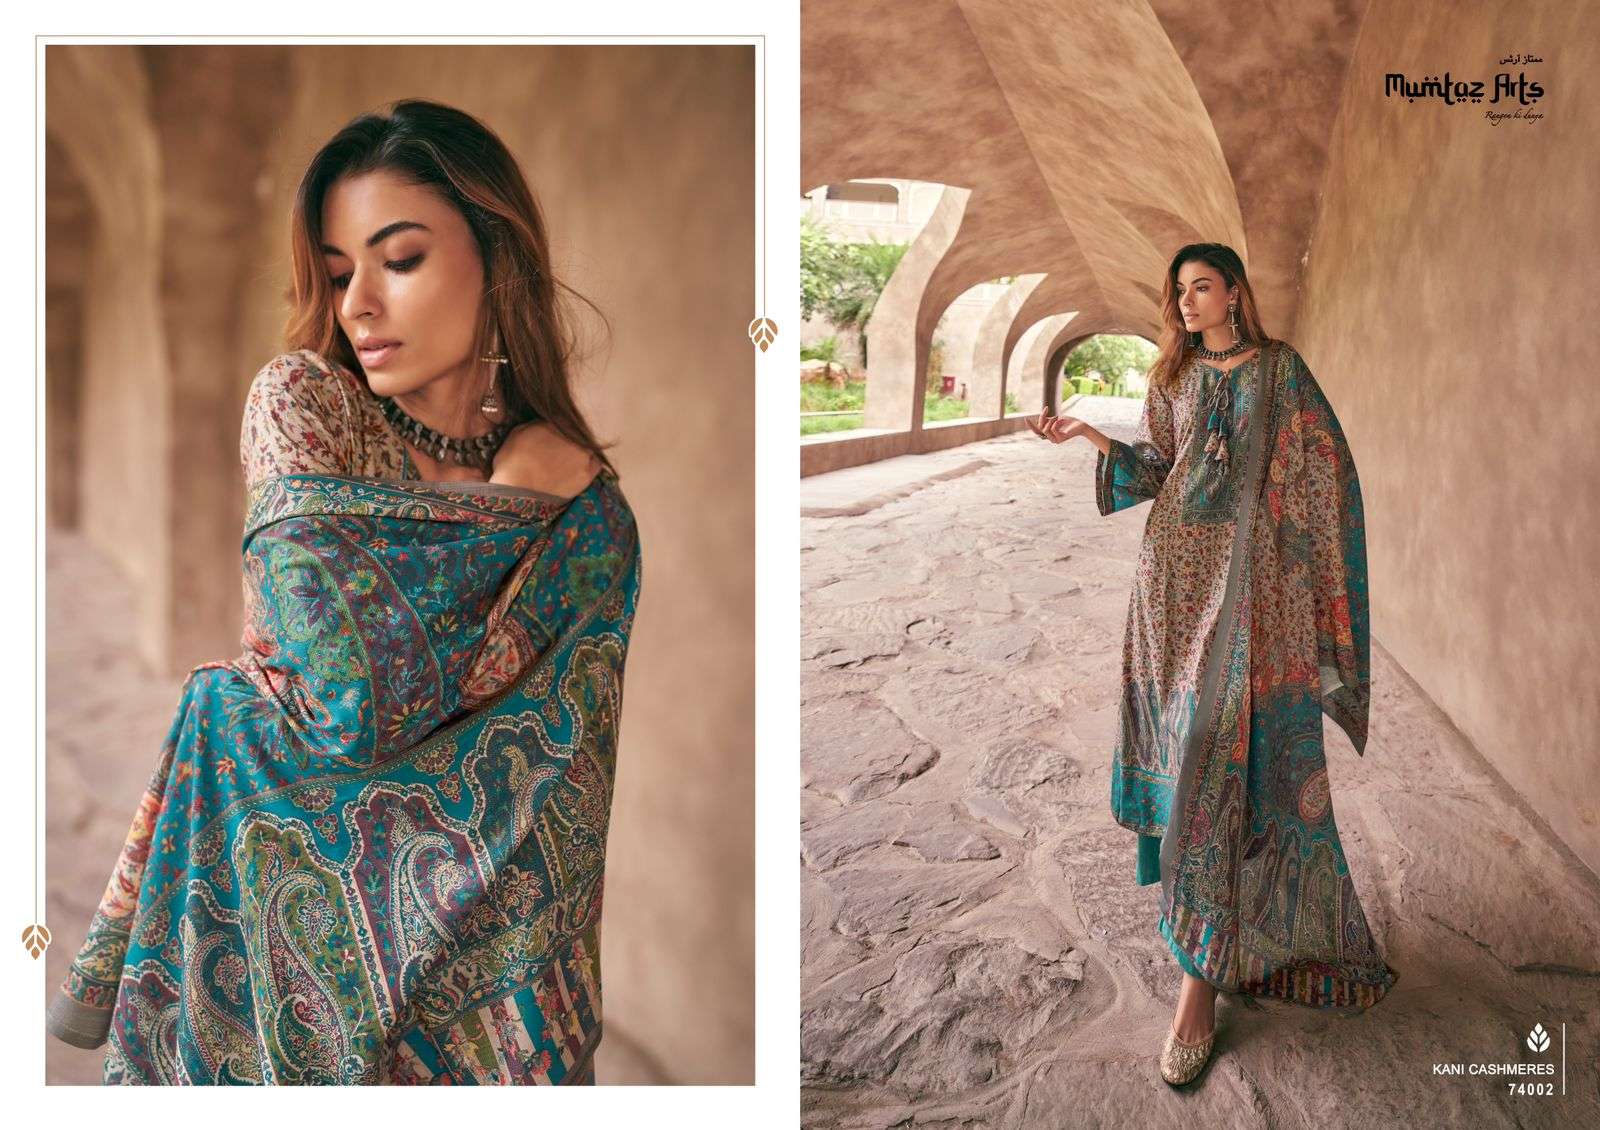 Mumtaz Kani Cashmeres 74001 To 74007 Dress Material Wholesale catalog